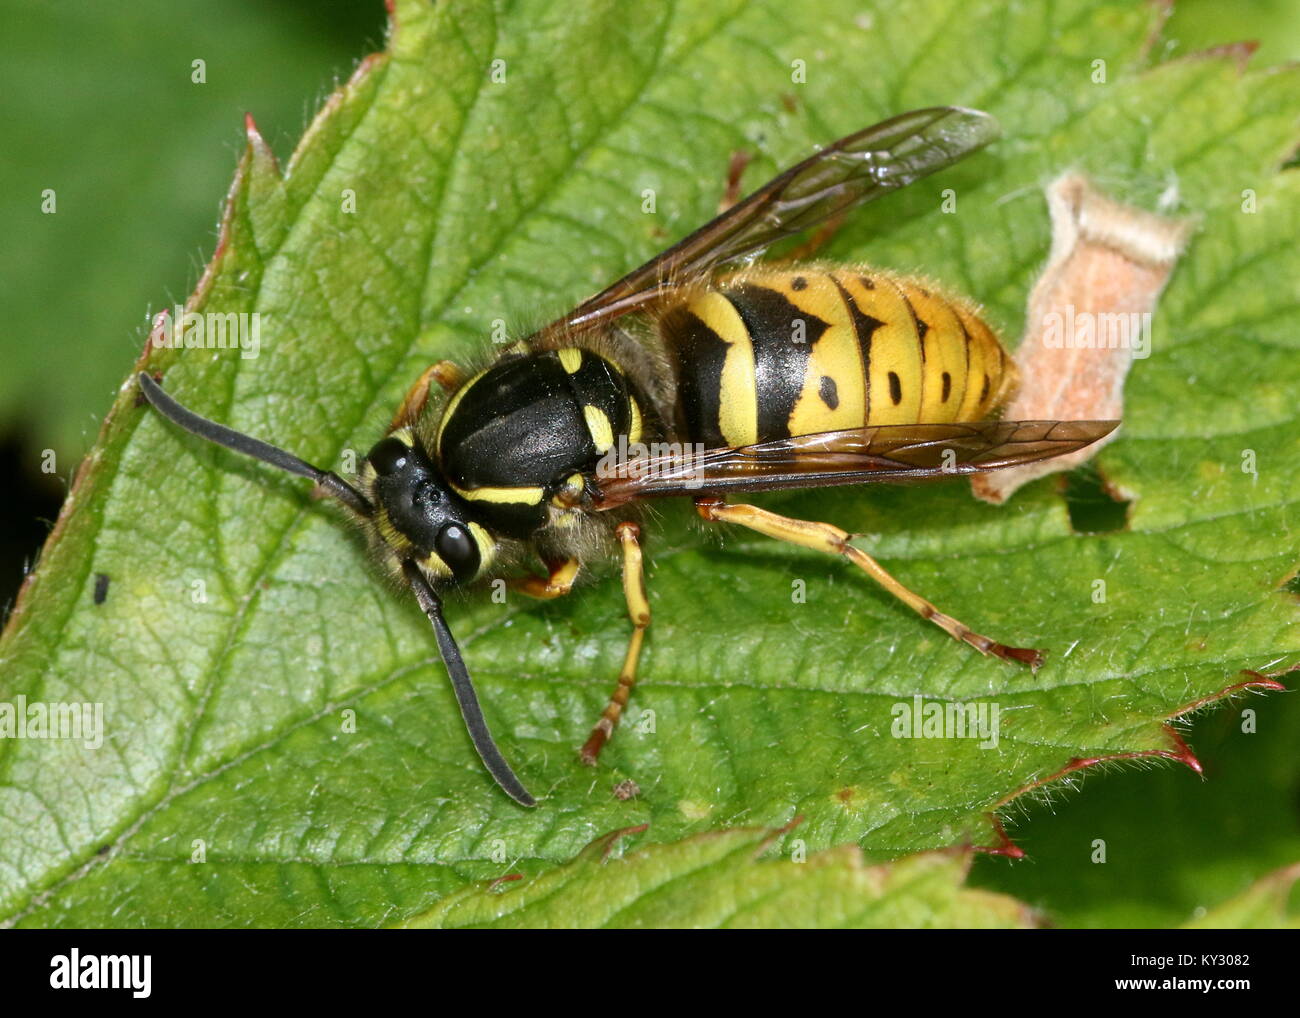 Common European wasps (Vespula vulgaris) on a leaf Stock Photo